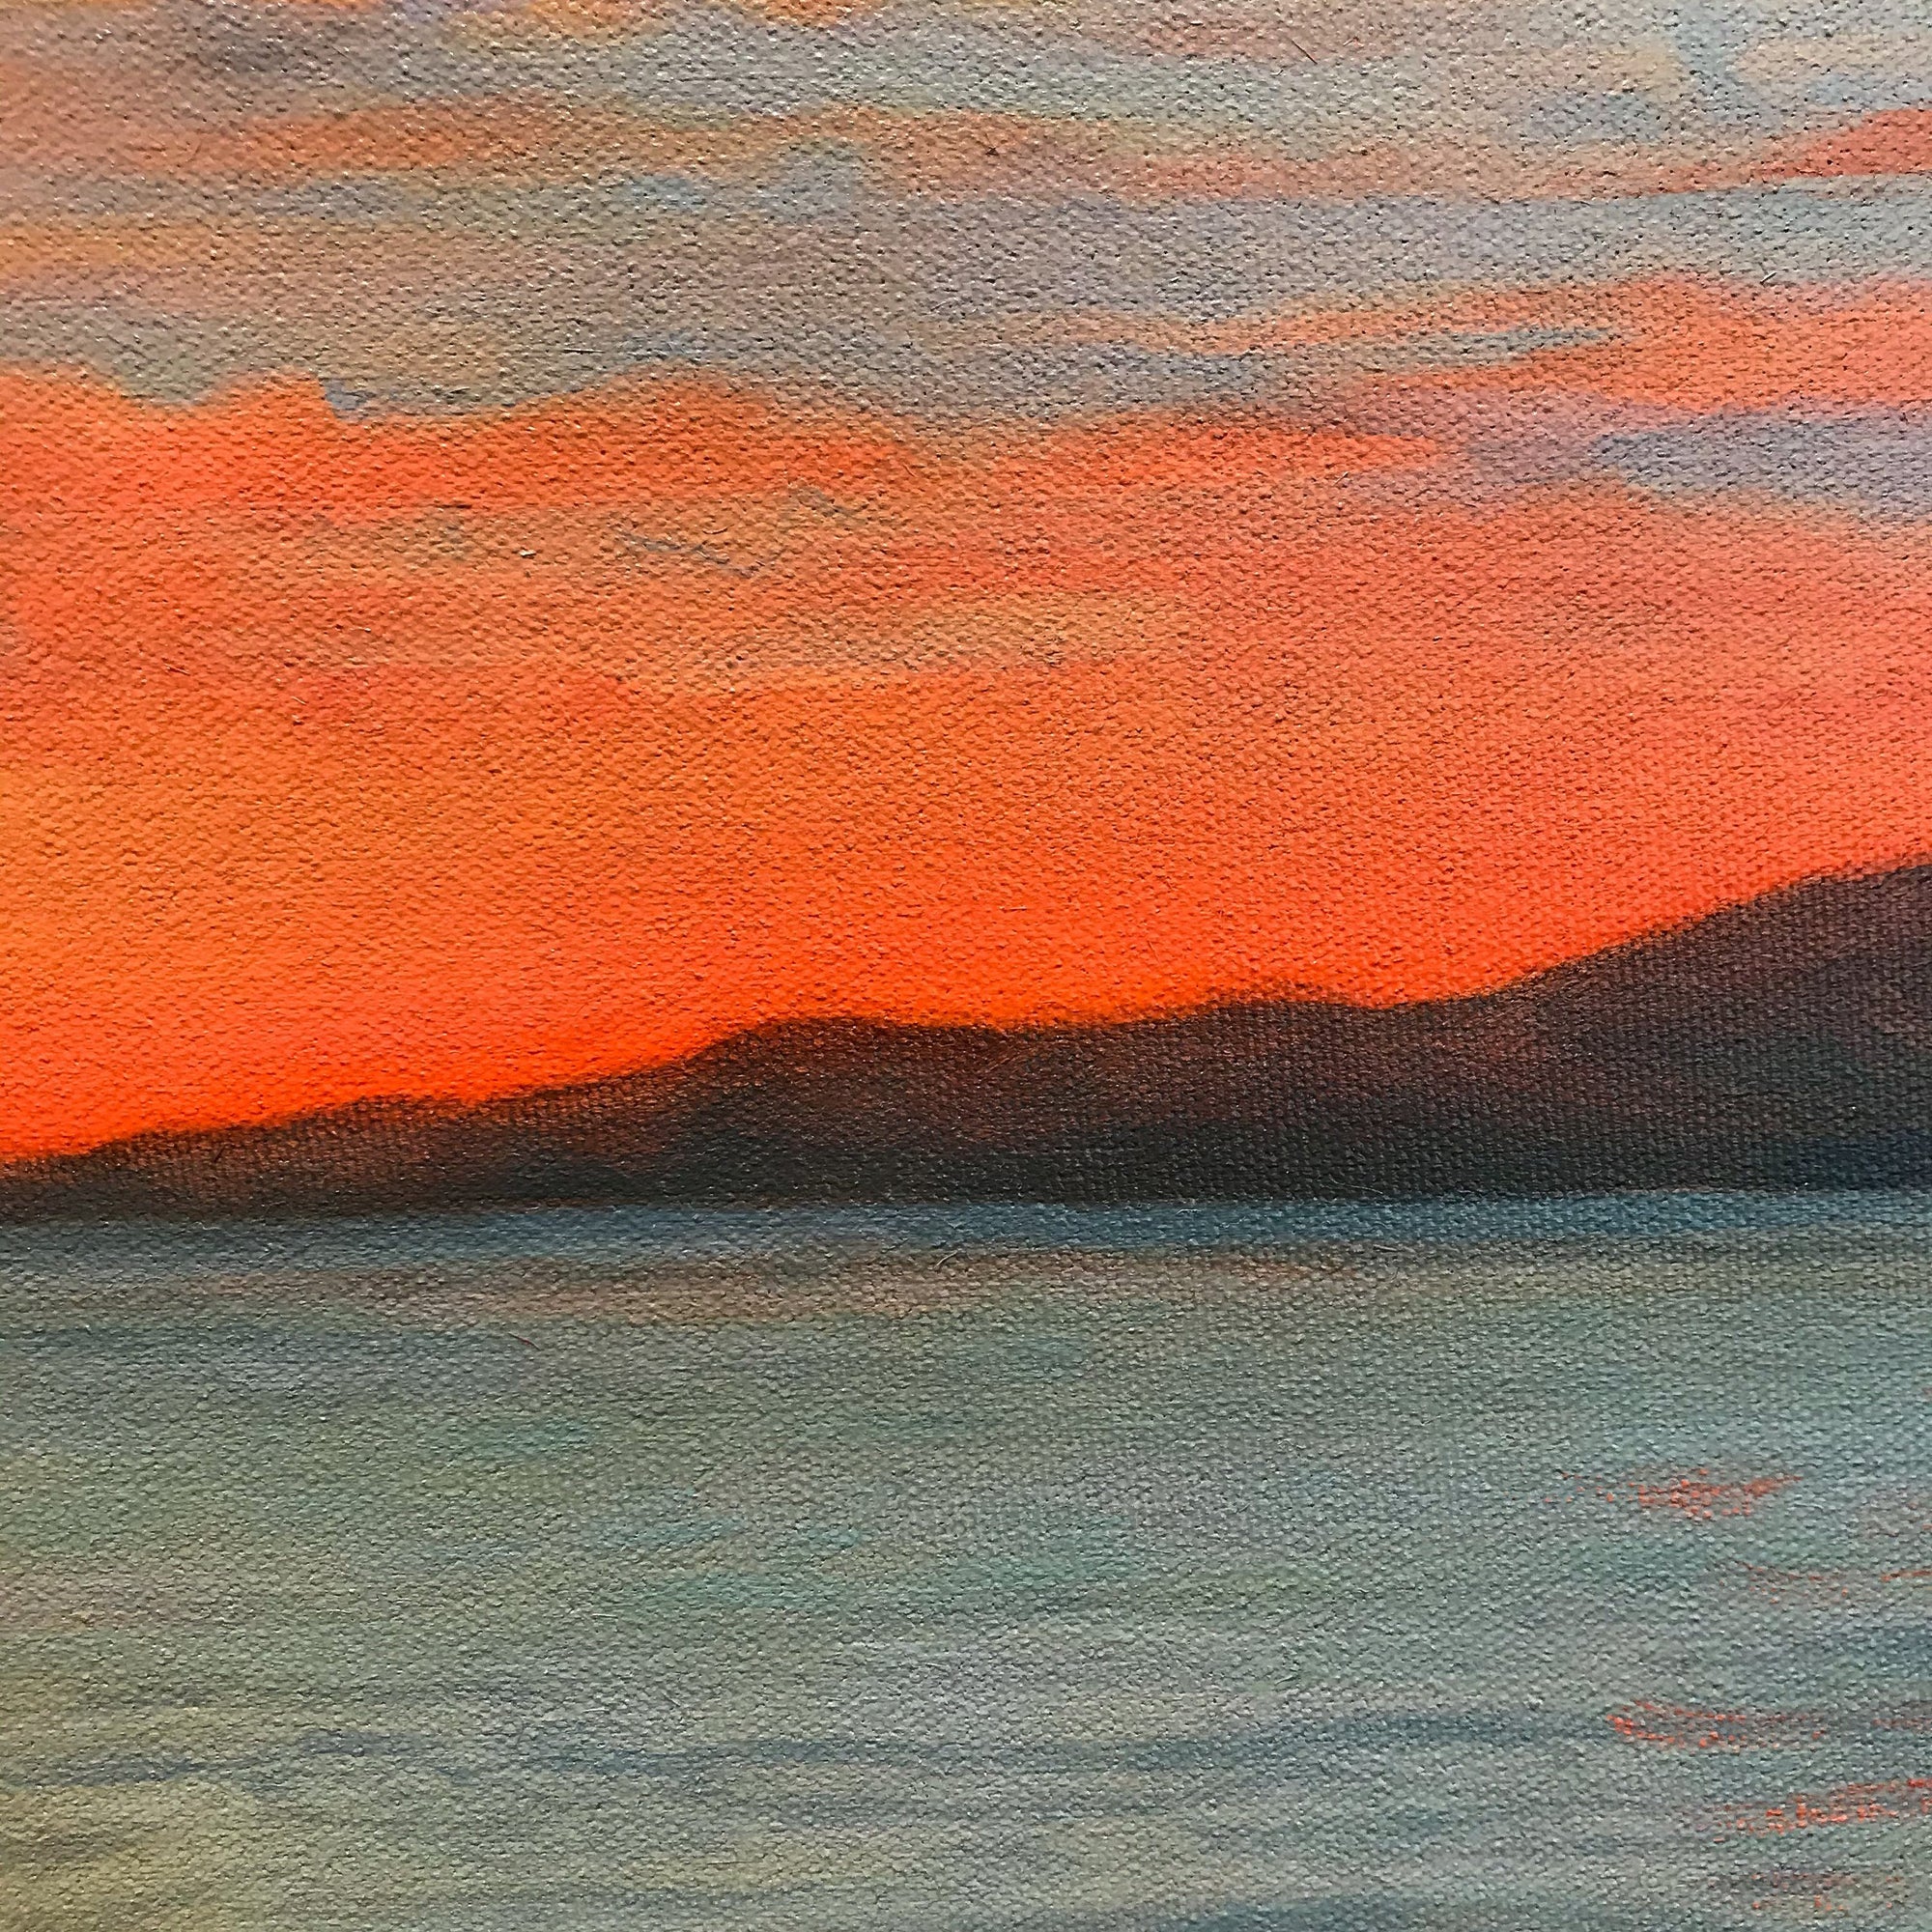 Salish Sea | 24" x 36" Oil on Canvas Patricia Johnston